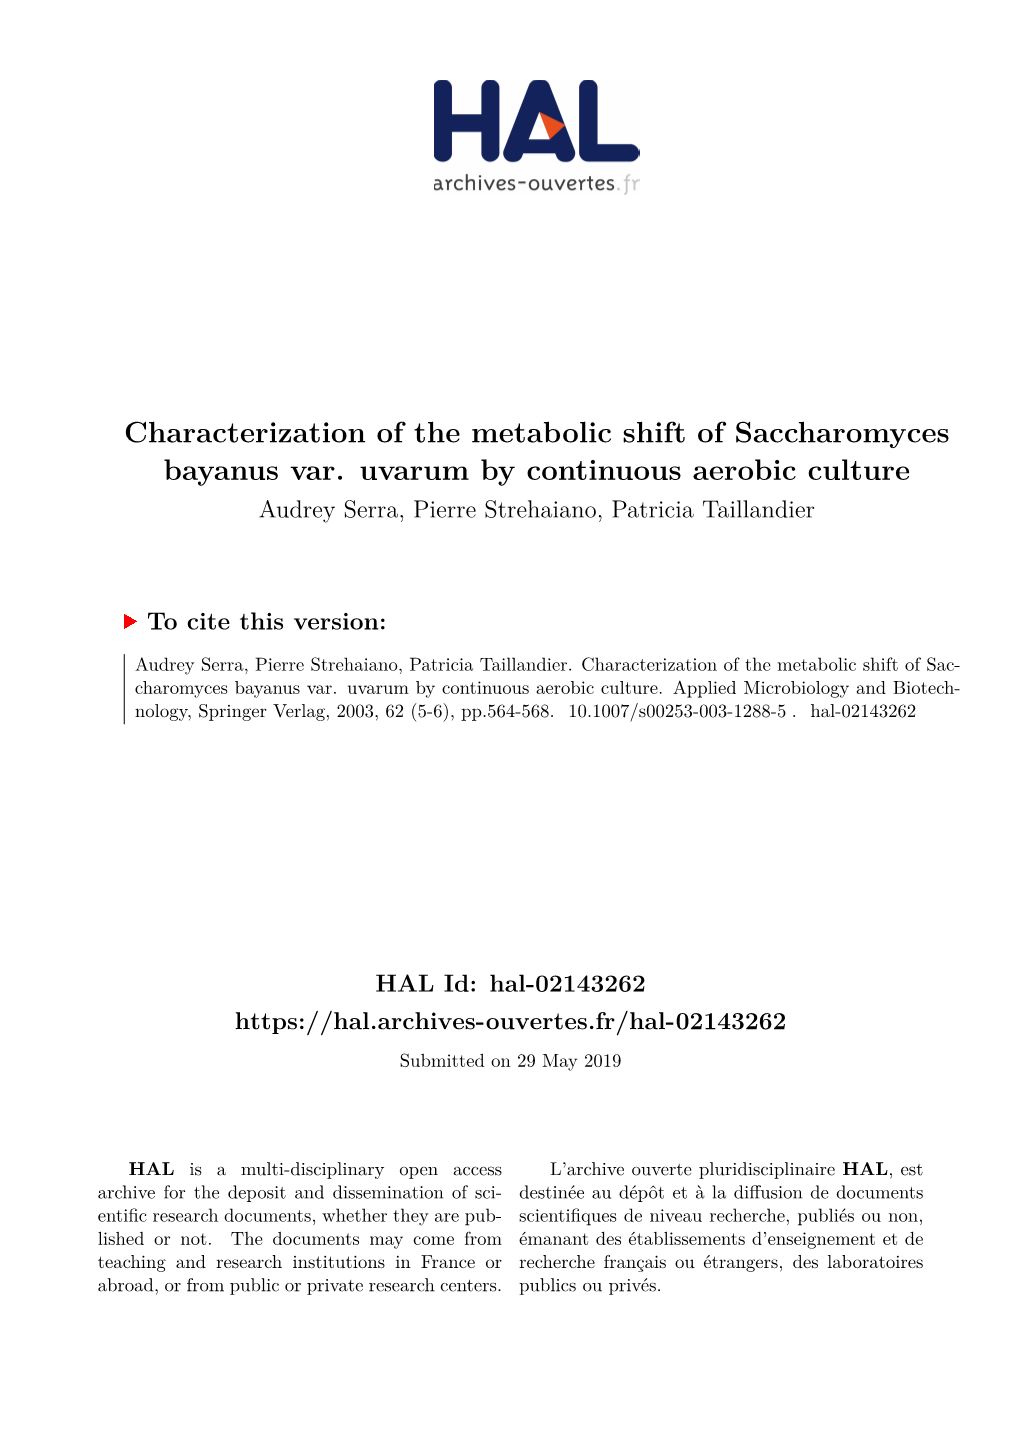 Characterization of the Metabolic Shift of Saccharomyces Bayanus Var